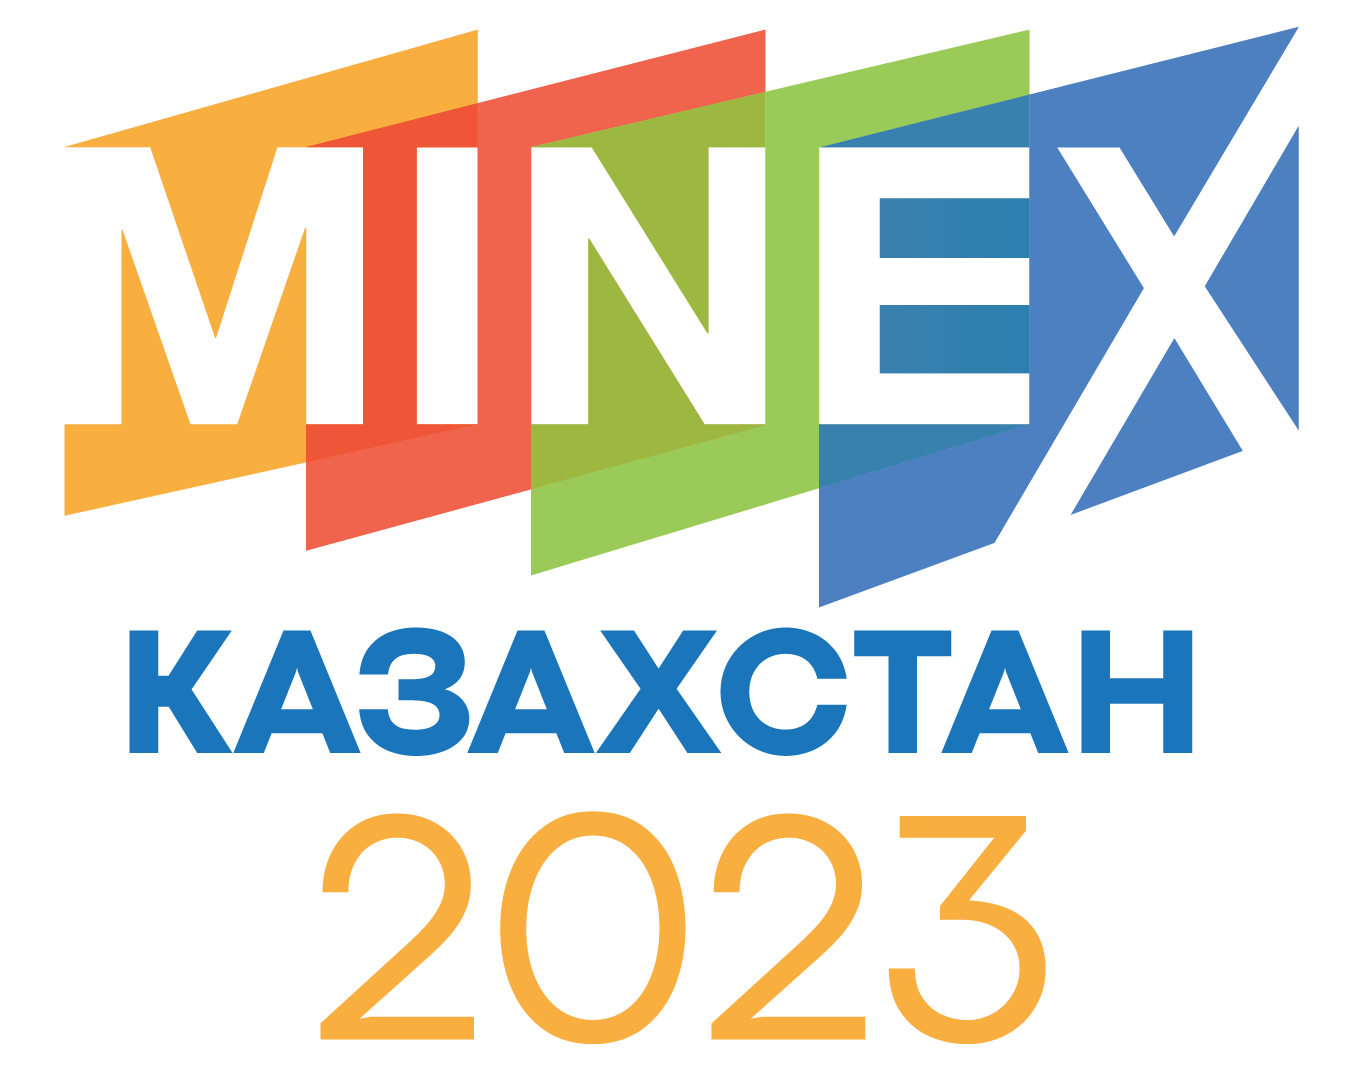 MINEX Kazakhstan 2023